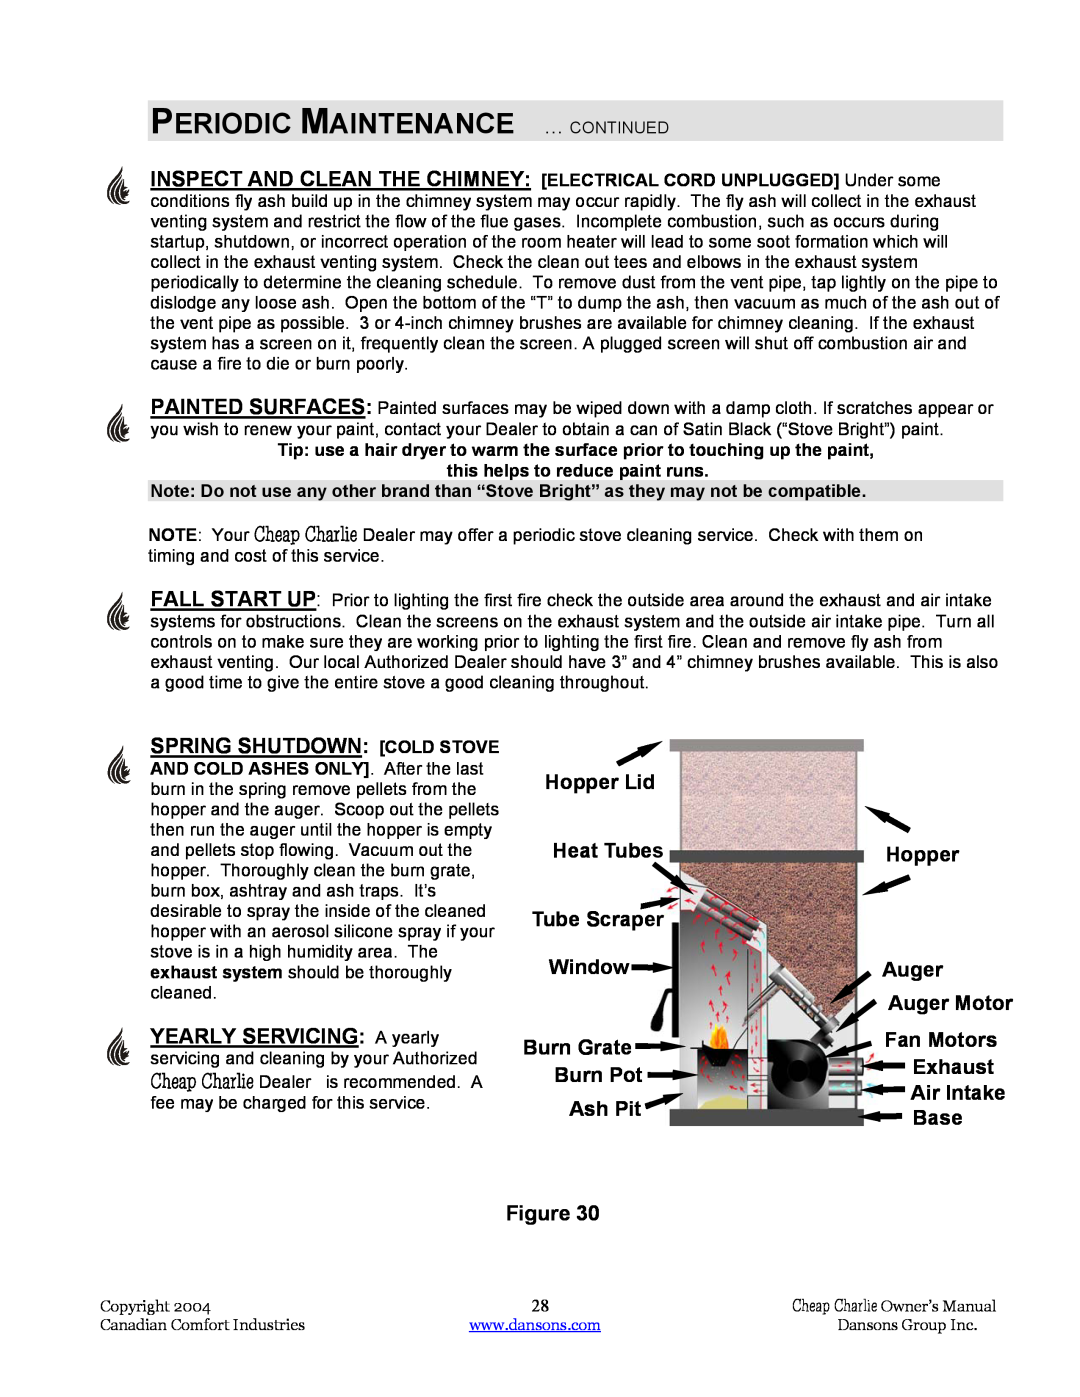 Dansons Group HCF120, HCS, HCF300 Periodic Maintenance … Continued, Spring Shutdown Cold Stove, Burn Grate Burn Pot Ash Pit 